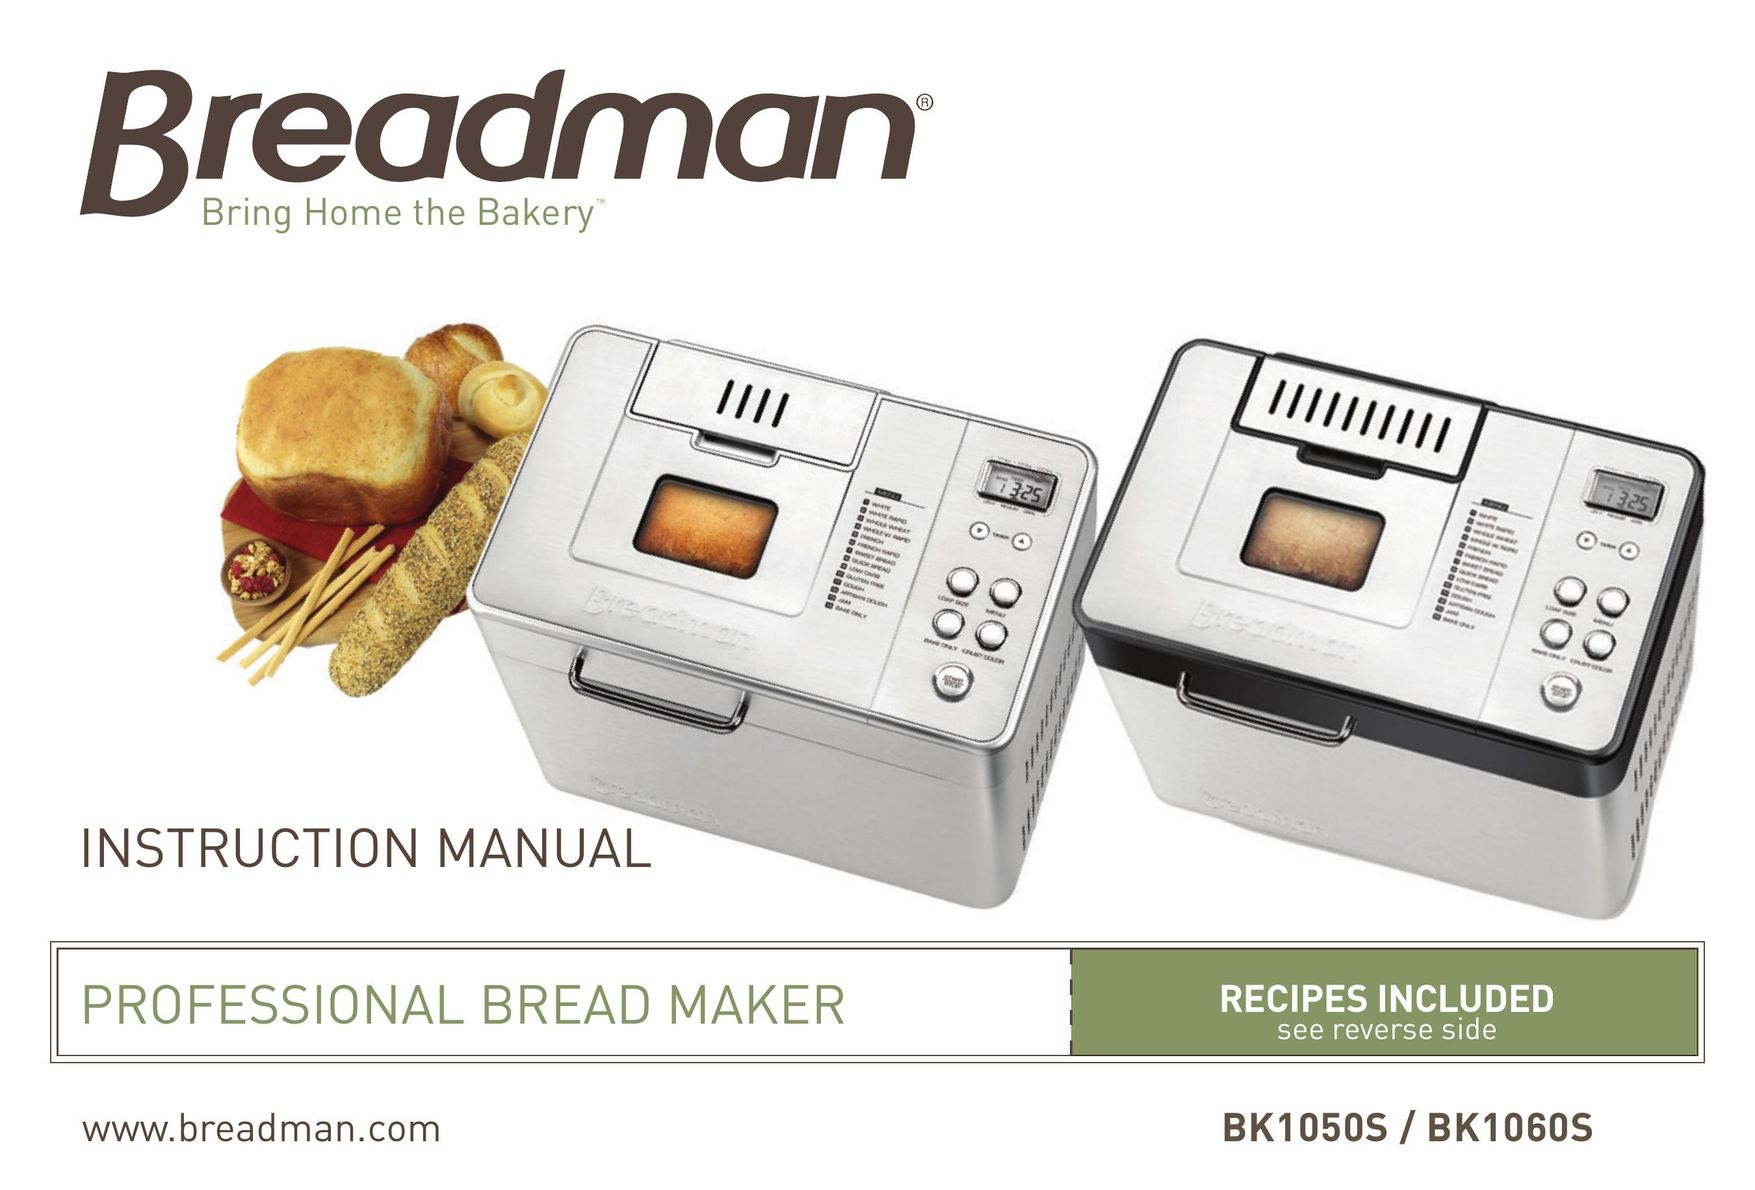 Breadman BK1050S Bread Maker User Manual